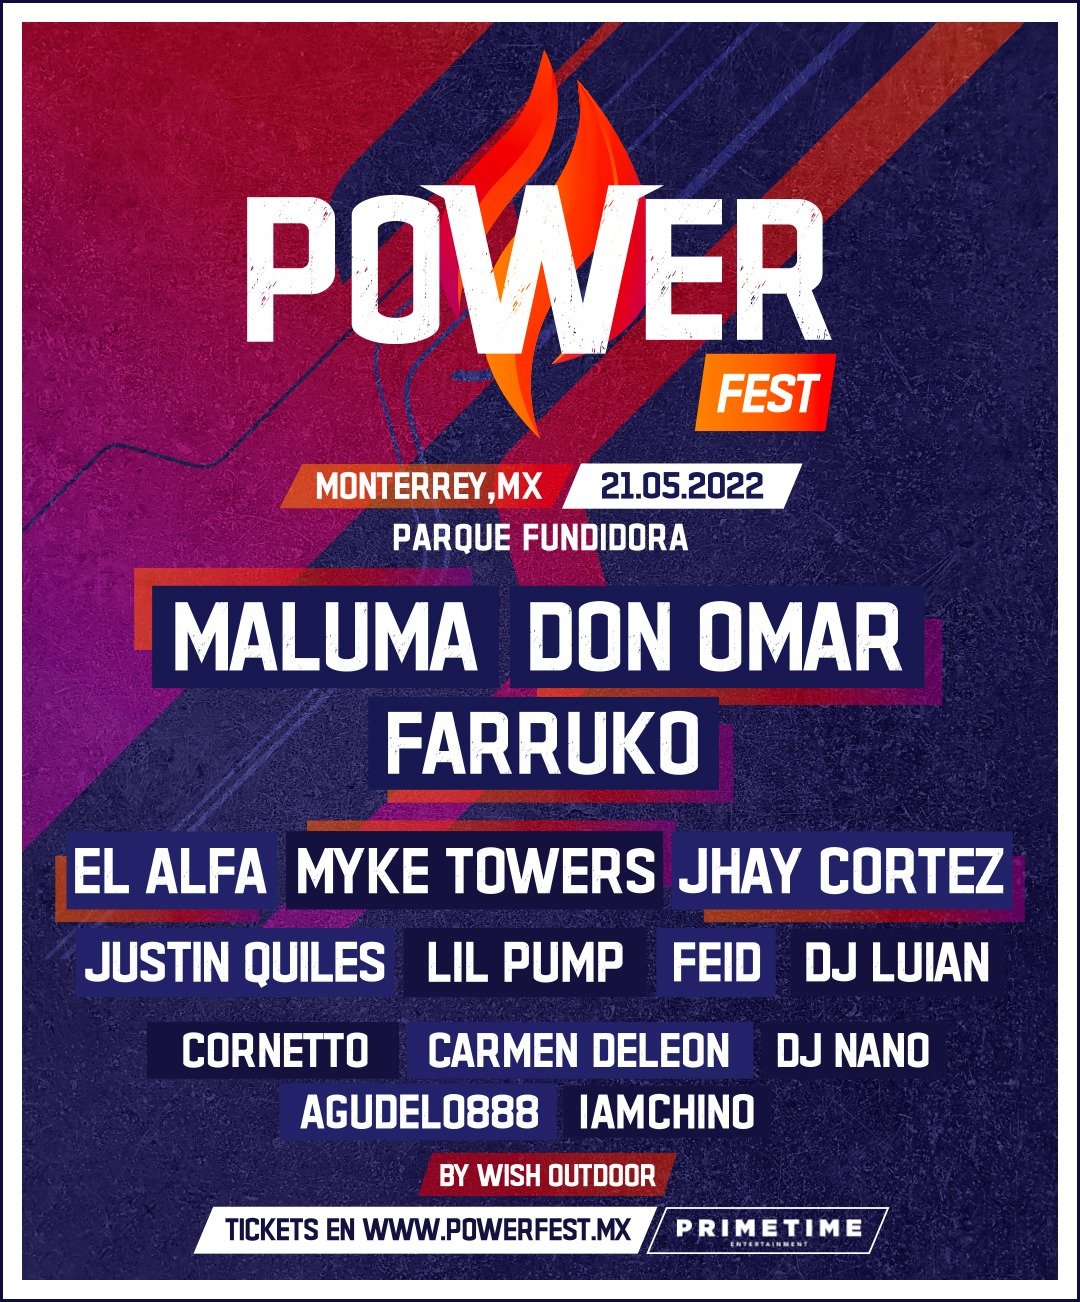 cartel del power fest 2022 monterrey maluma